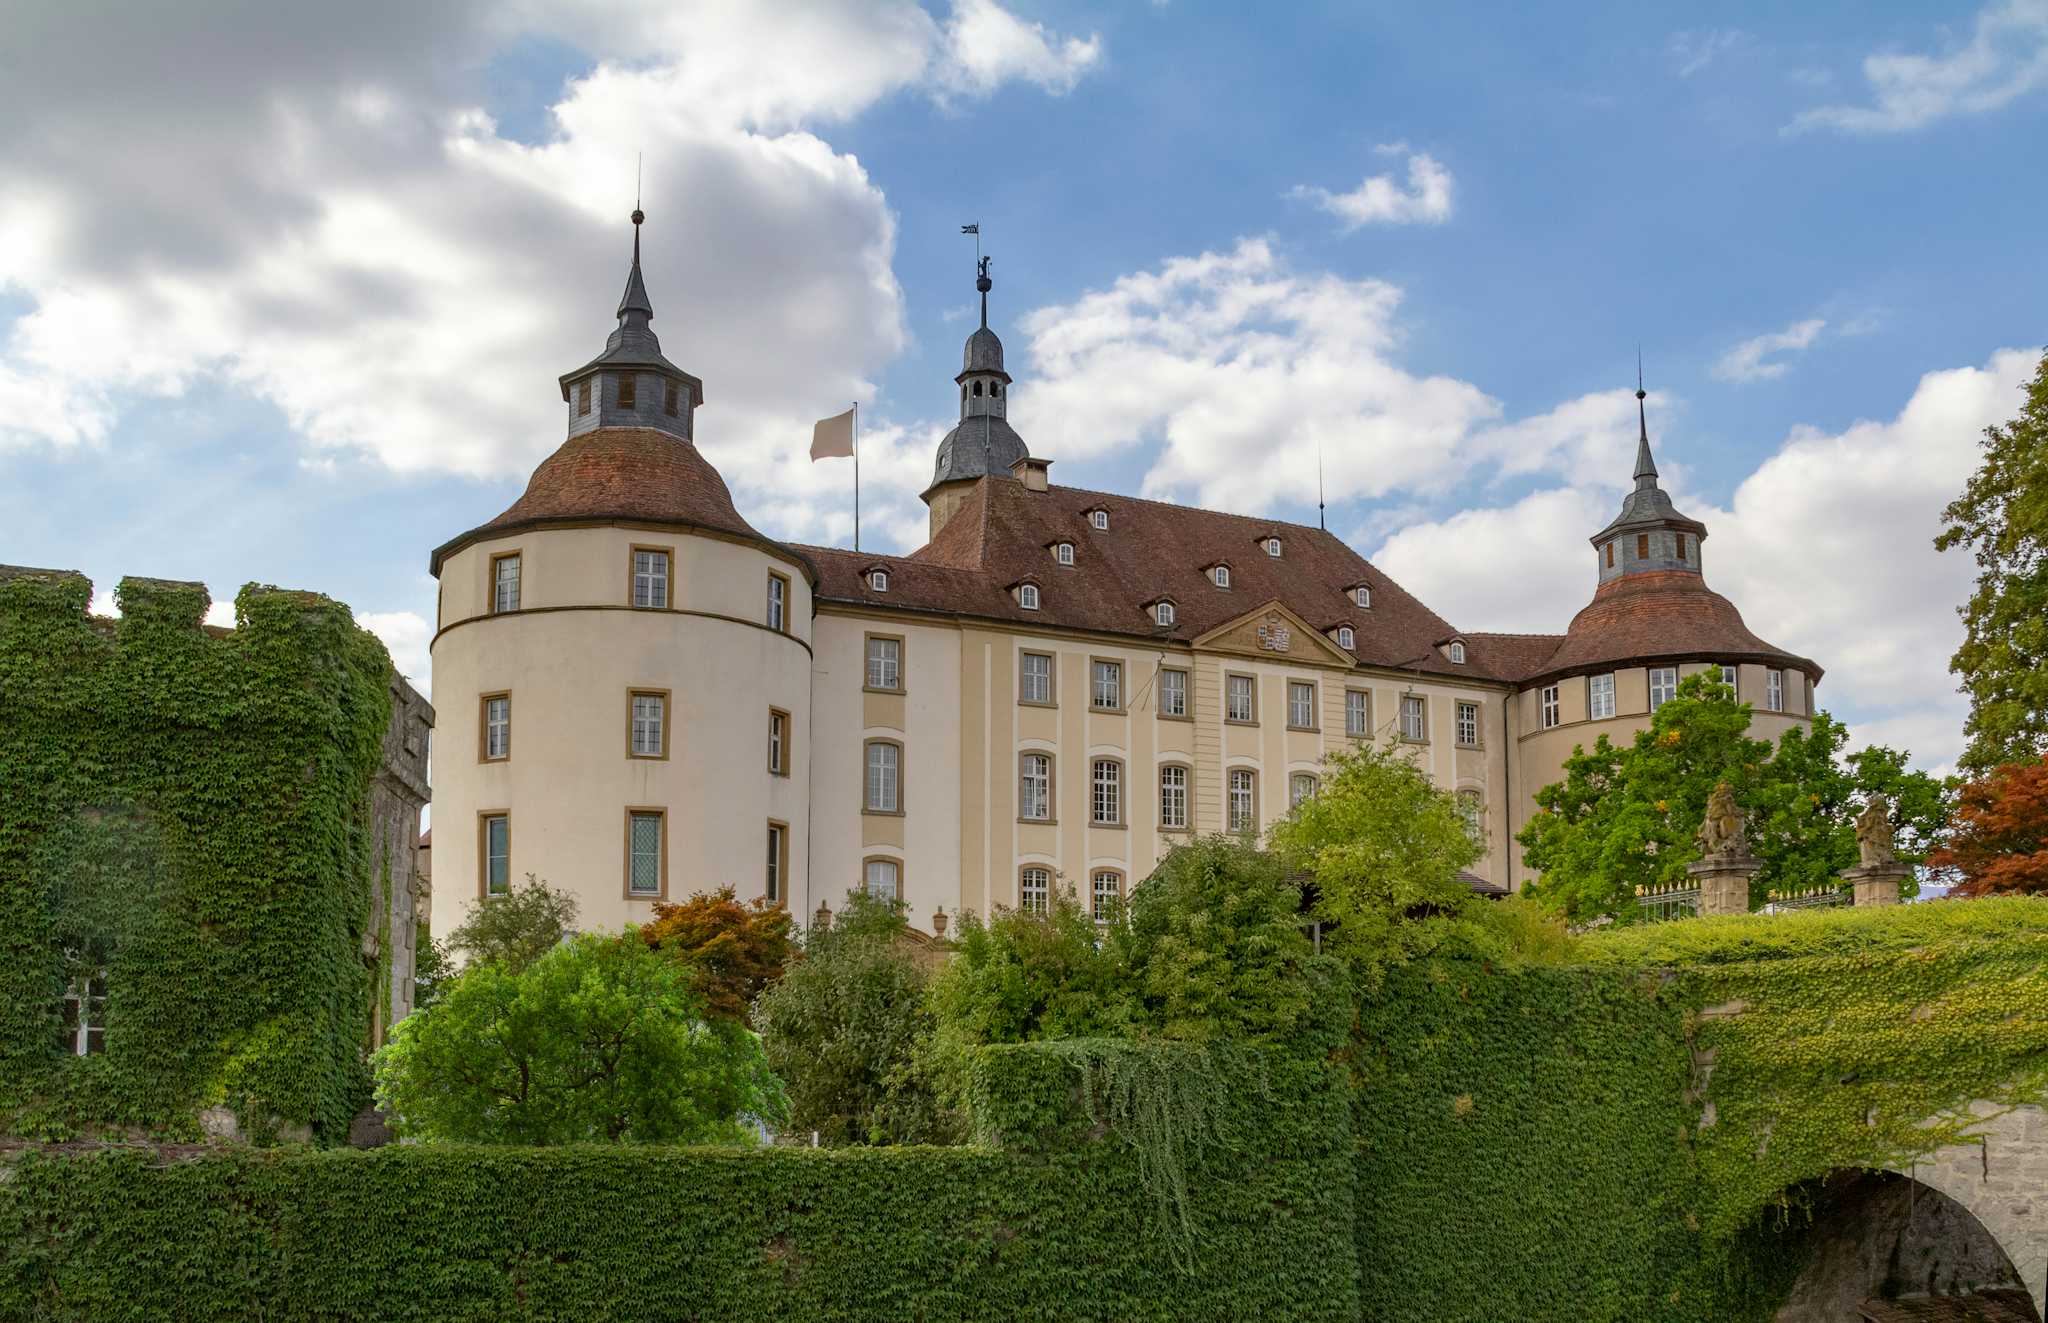 Langenburg castle